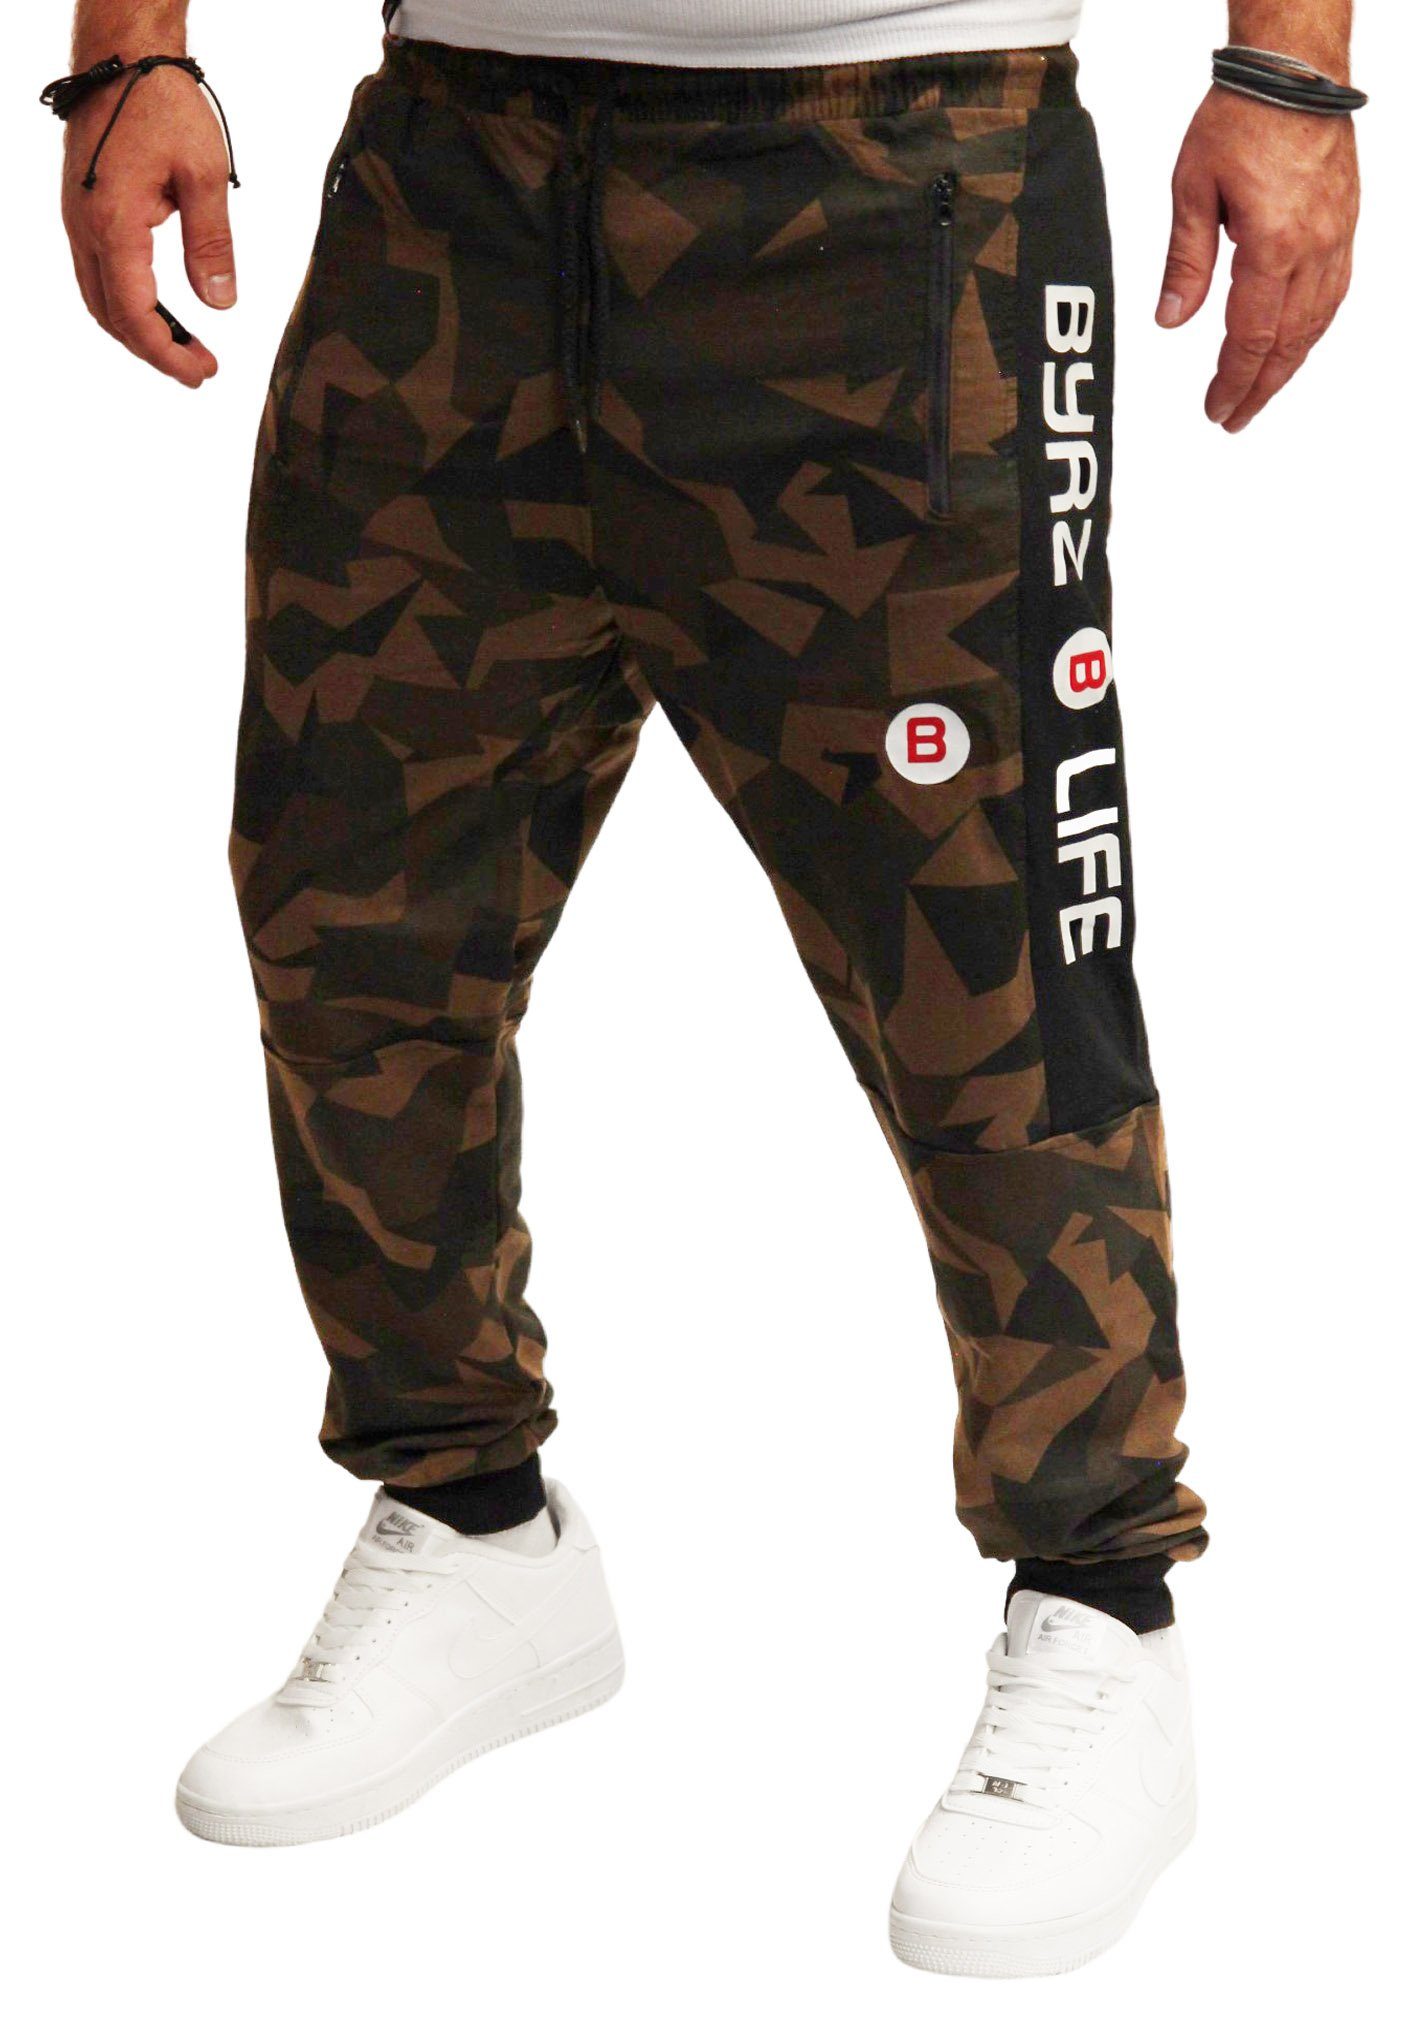 RMK Jogginghose Camouflage Army Camouflage Hose Herren Sport Trainingshose Fitnesshose (H.12) Tarn